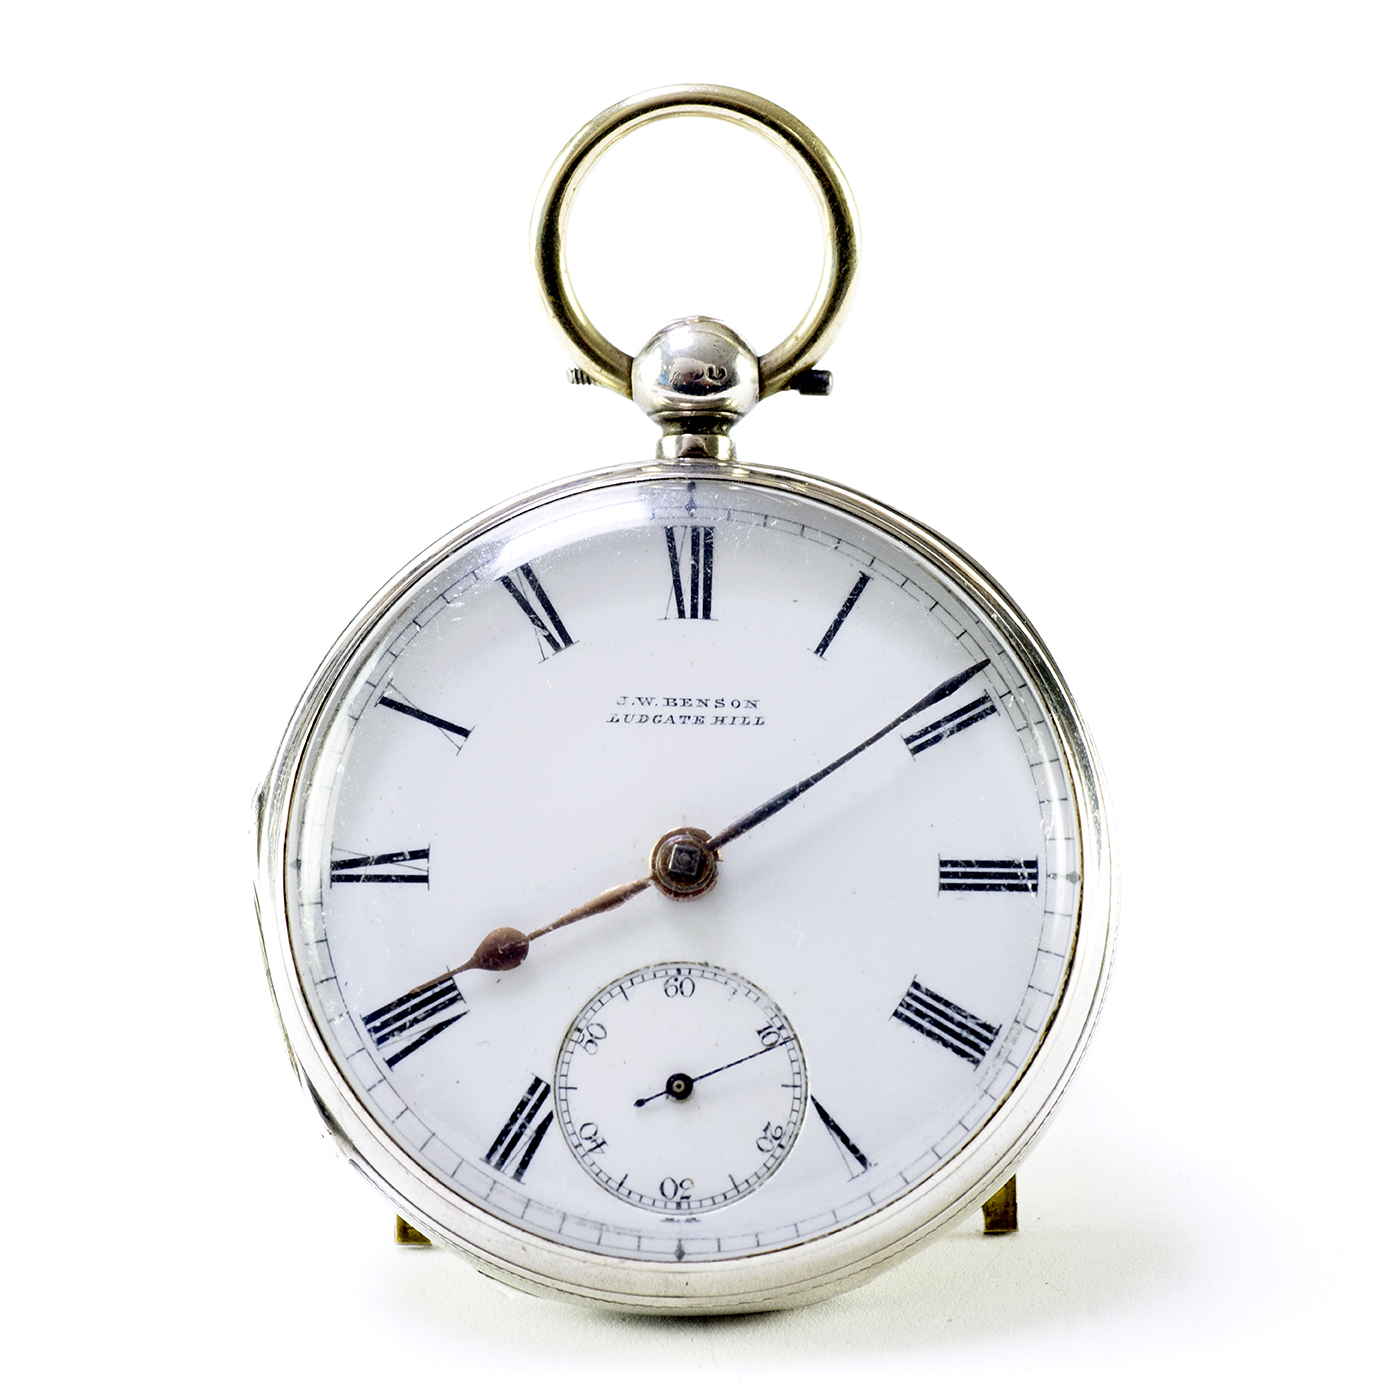 J.W. BENSON (Ludgate Hill). Reloj Inglés de Bolsillo, Lepine, Half Fusee (Semicatalino). Londres, 1872.